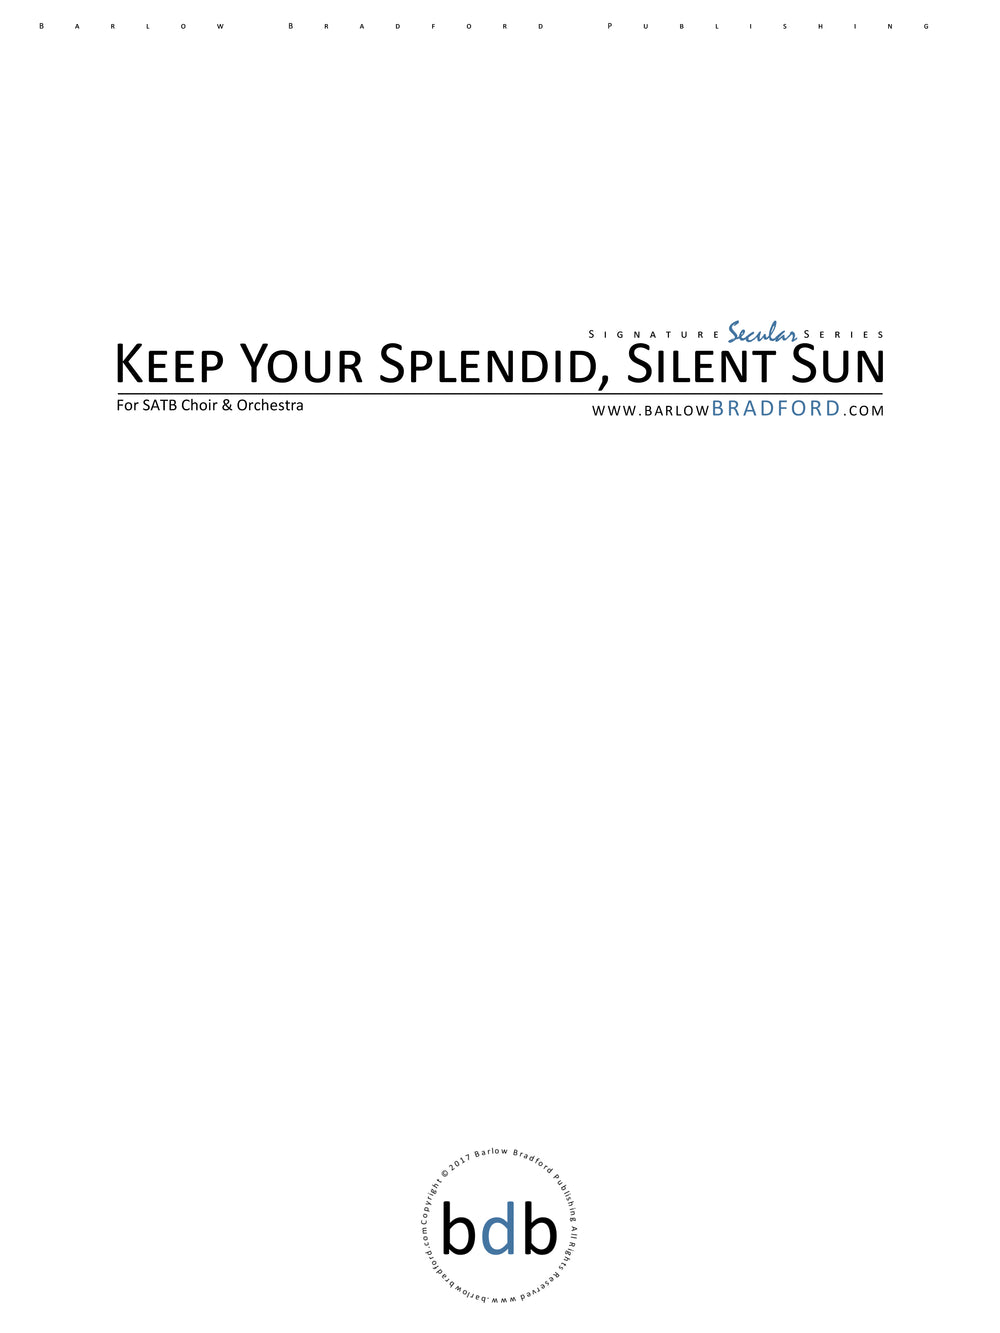 Keep Your Splendid, Silent Sun